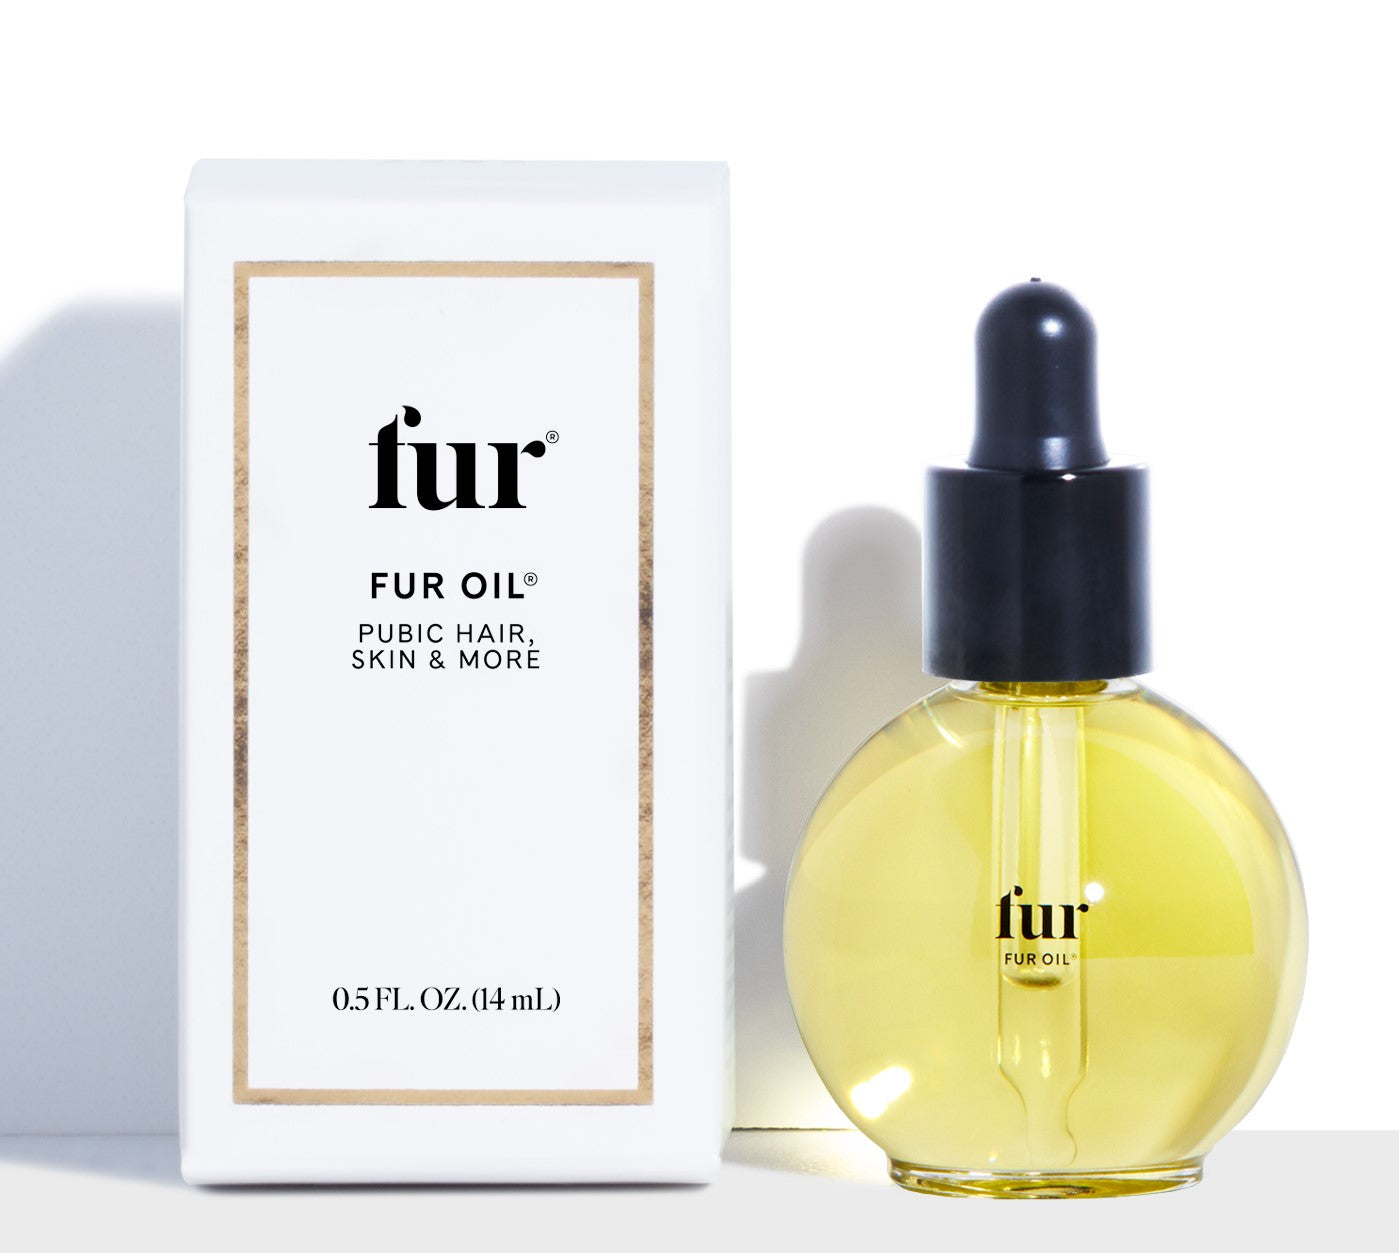 Fur Oil 14ml Travel Size